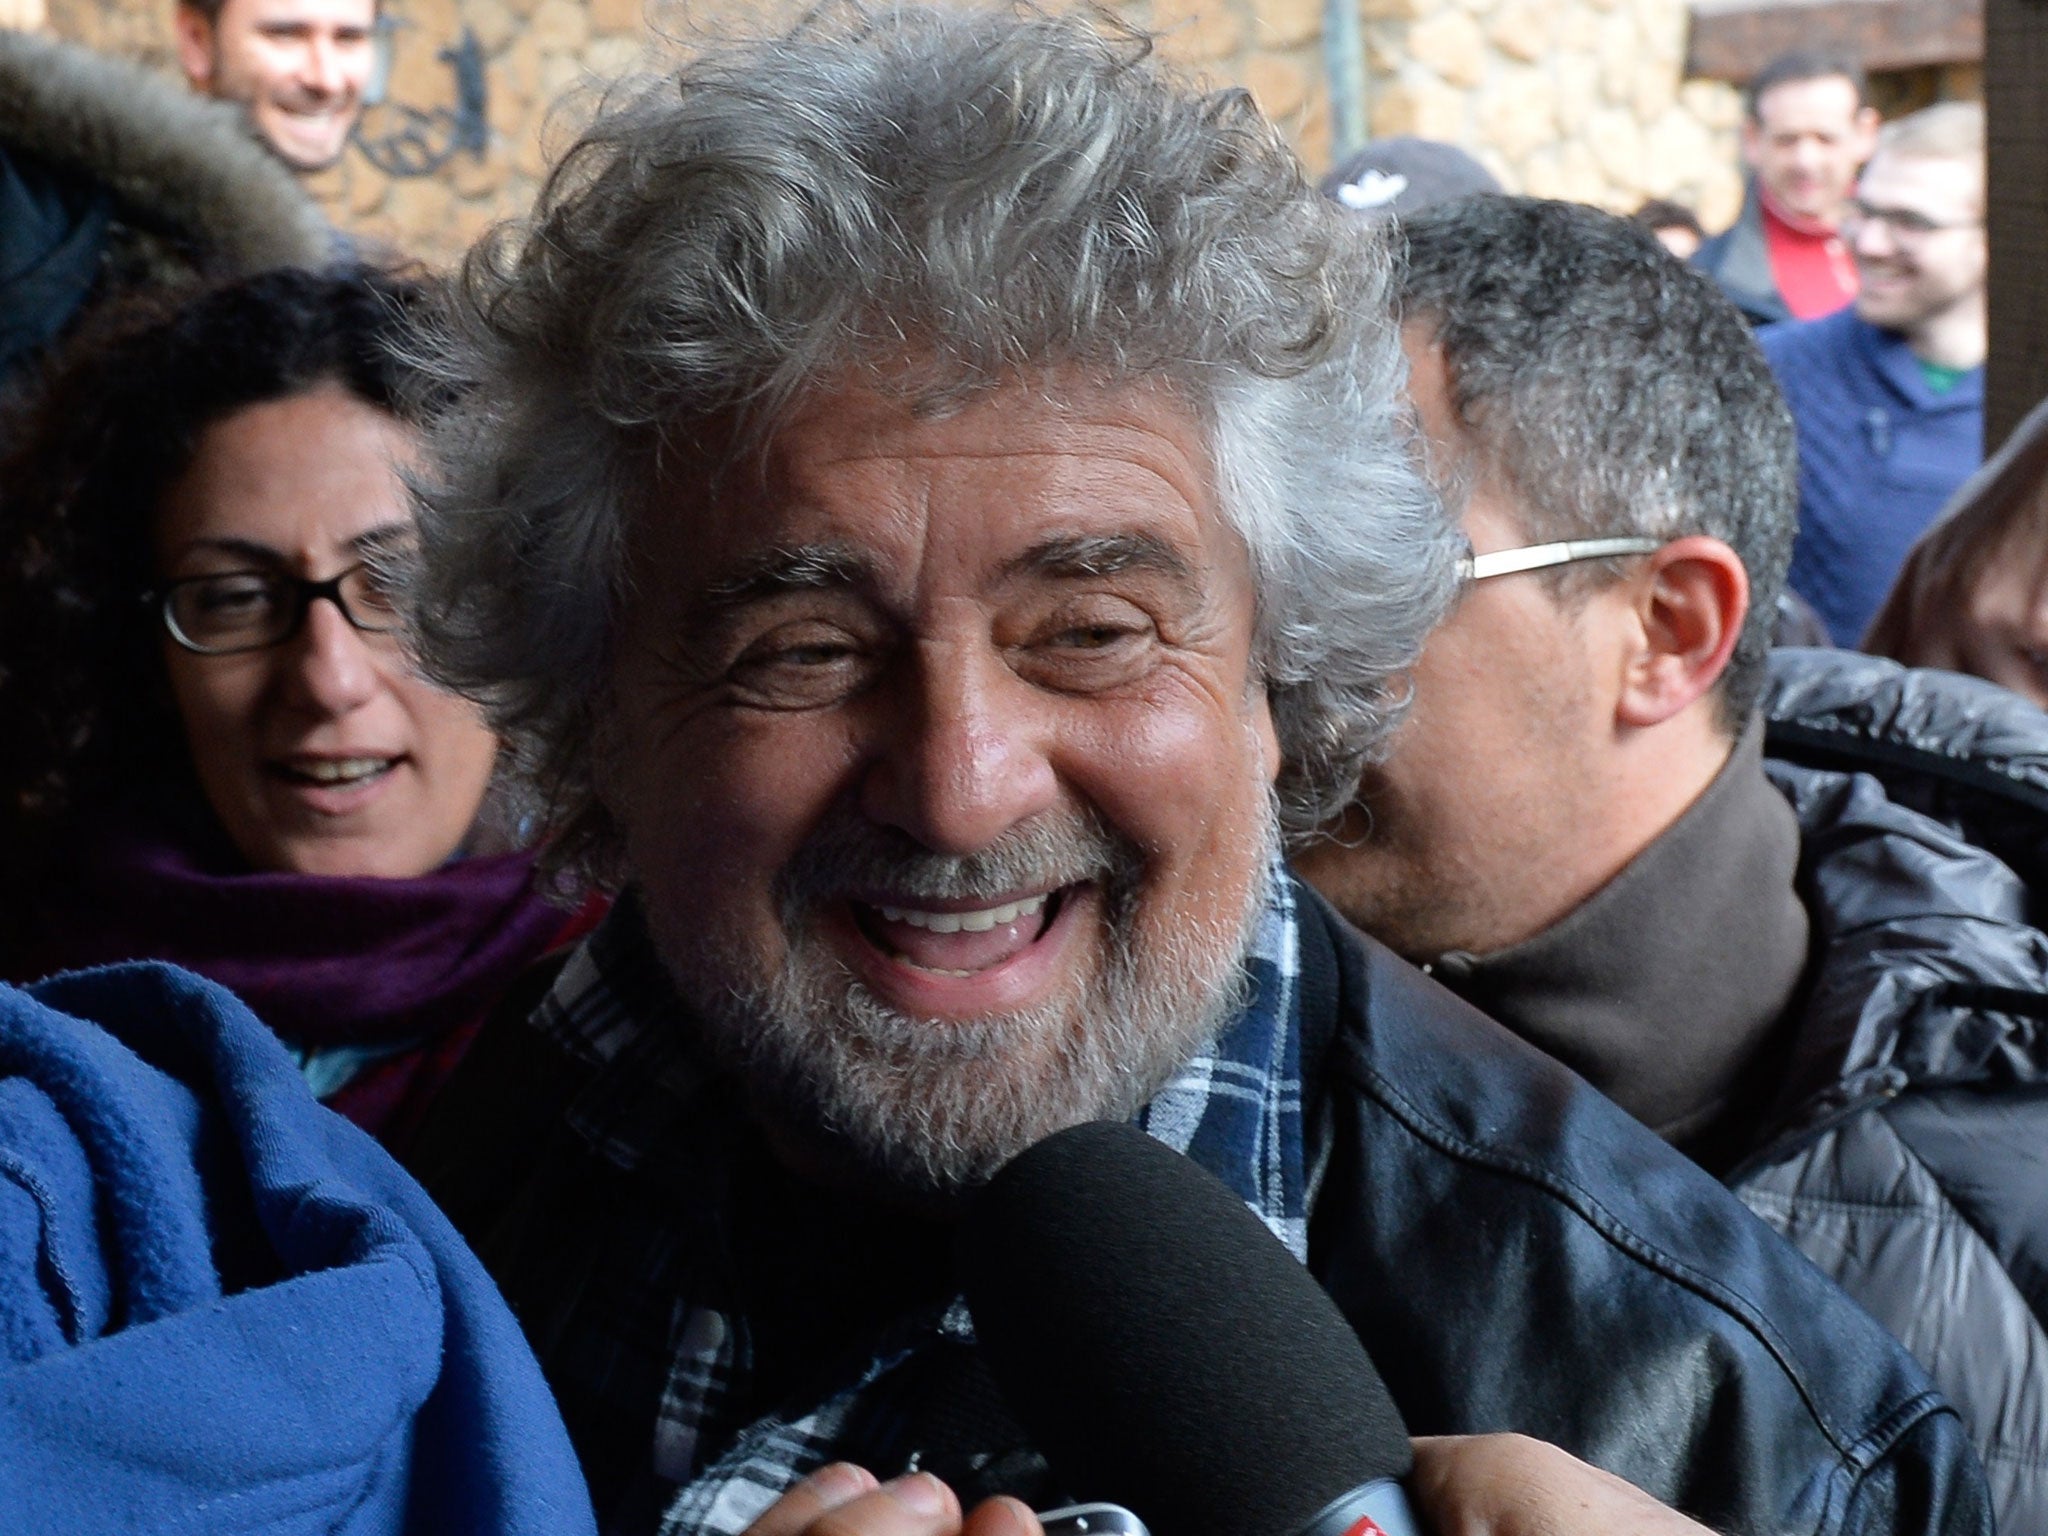 Odd couple: Beppe Grillo enjoys the limelight, whereas his partner, Gianroberto Casaleggio, is more elusive